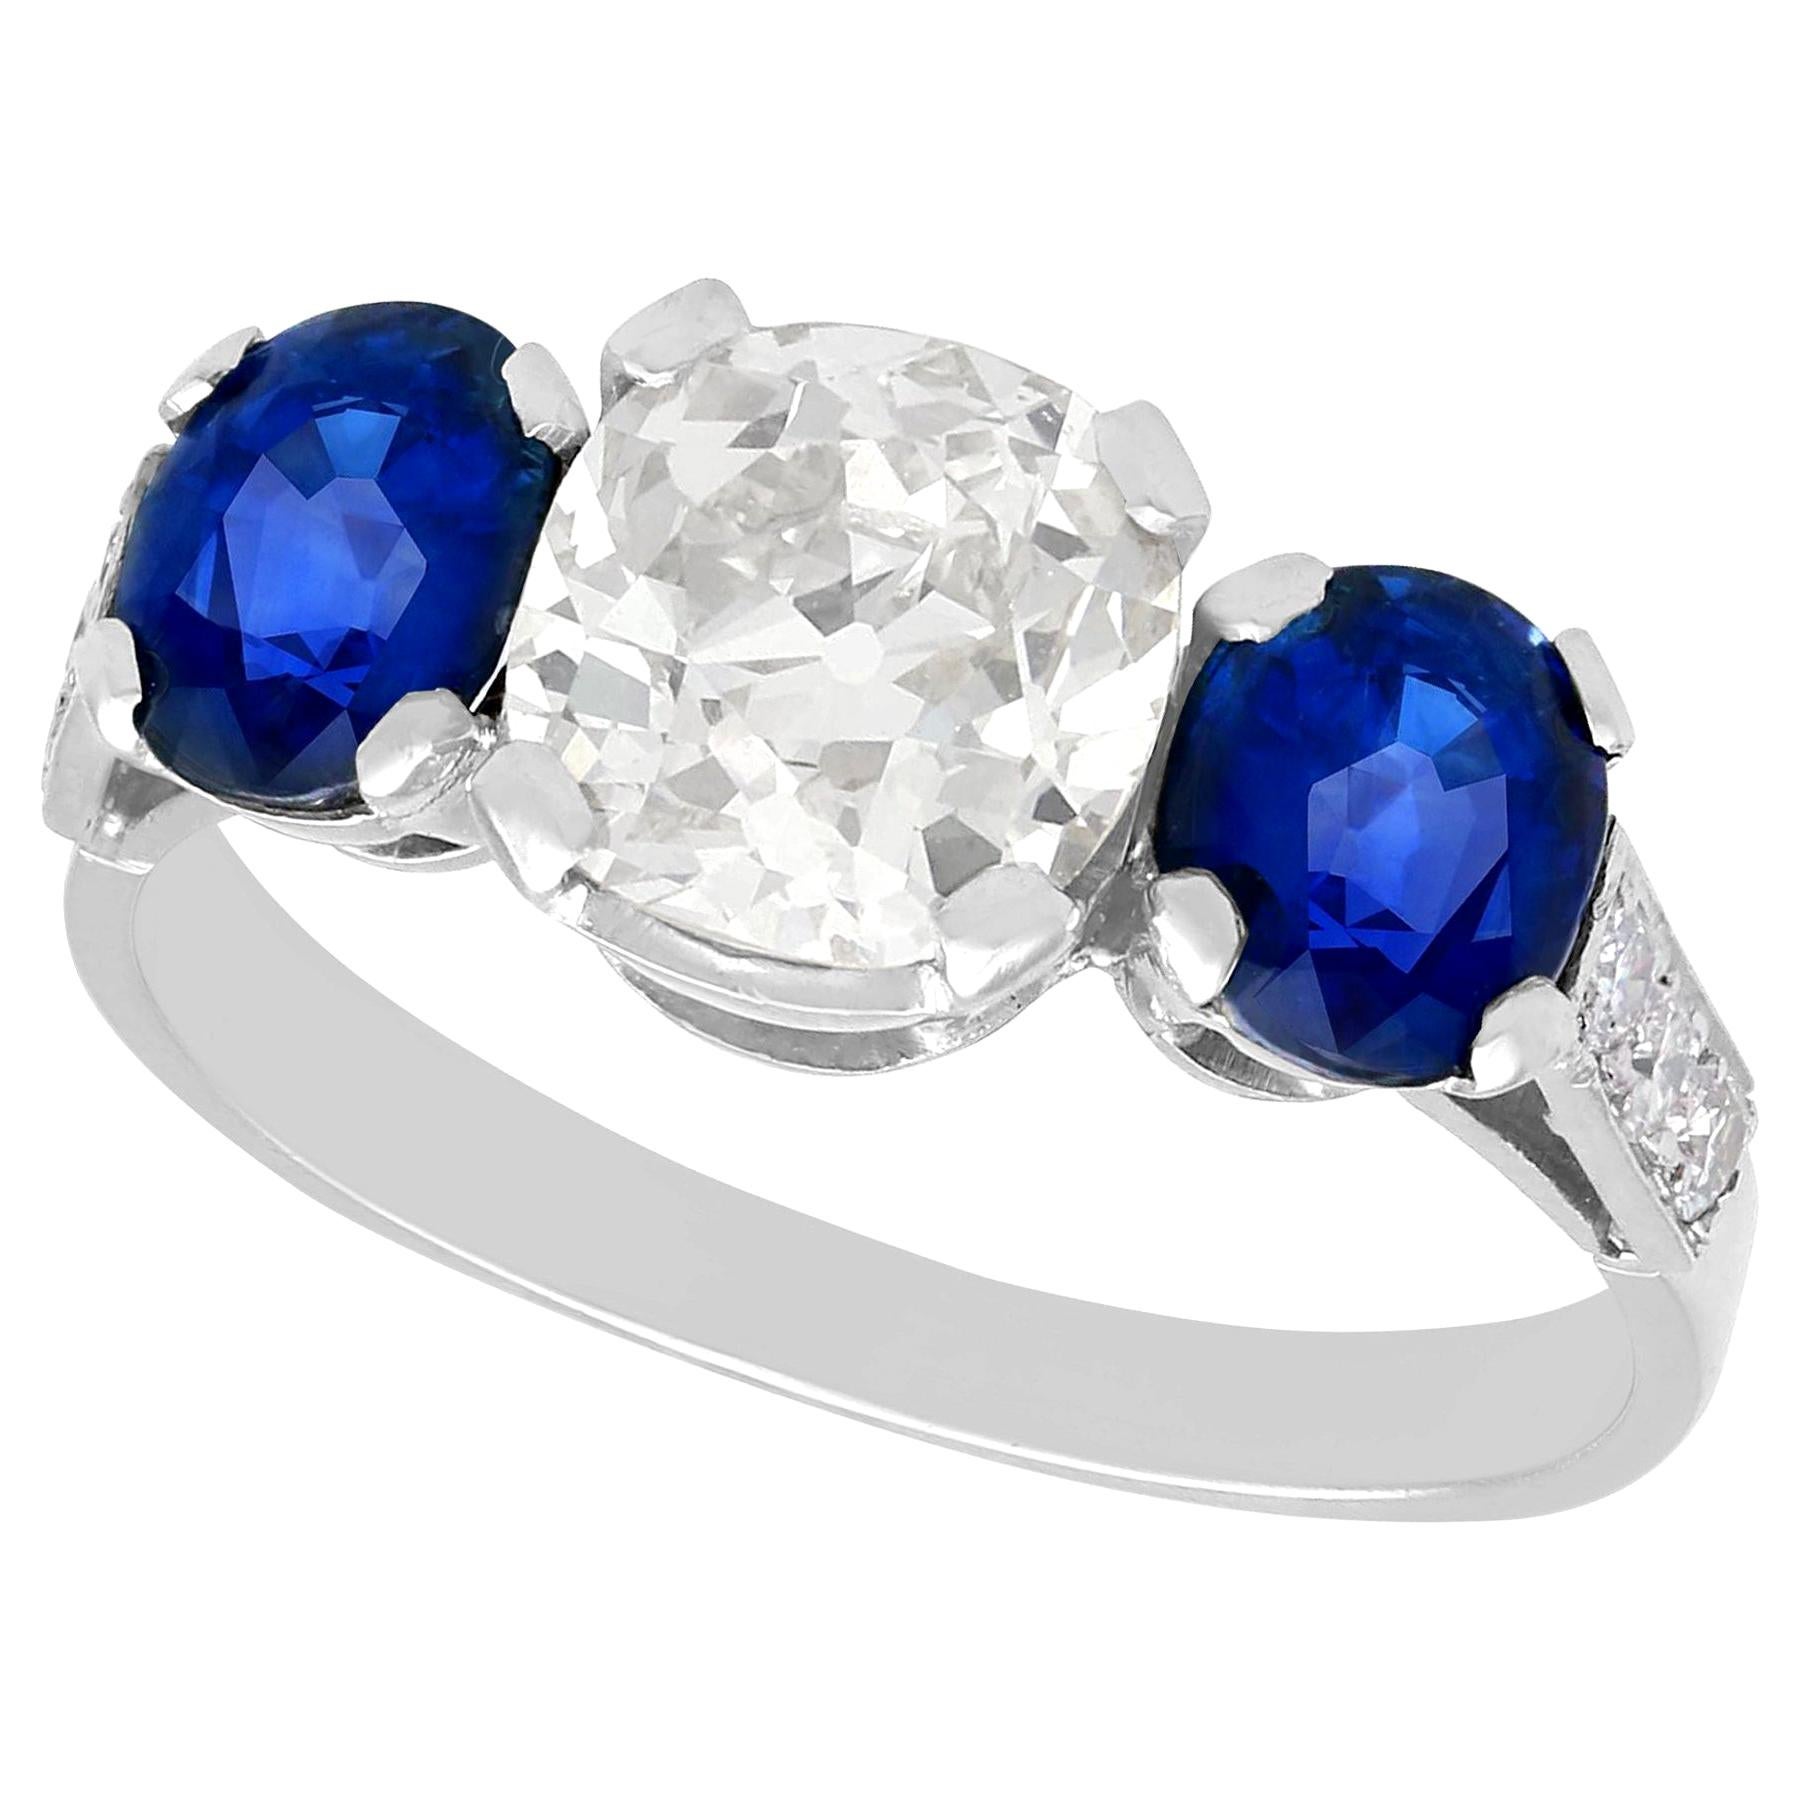 1.62 Carat Sapphire and 1.86 Carat Diamond Trilogy Ring